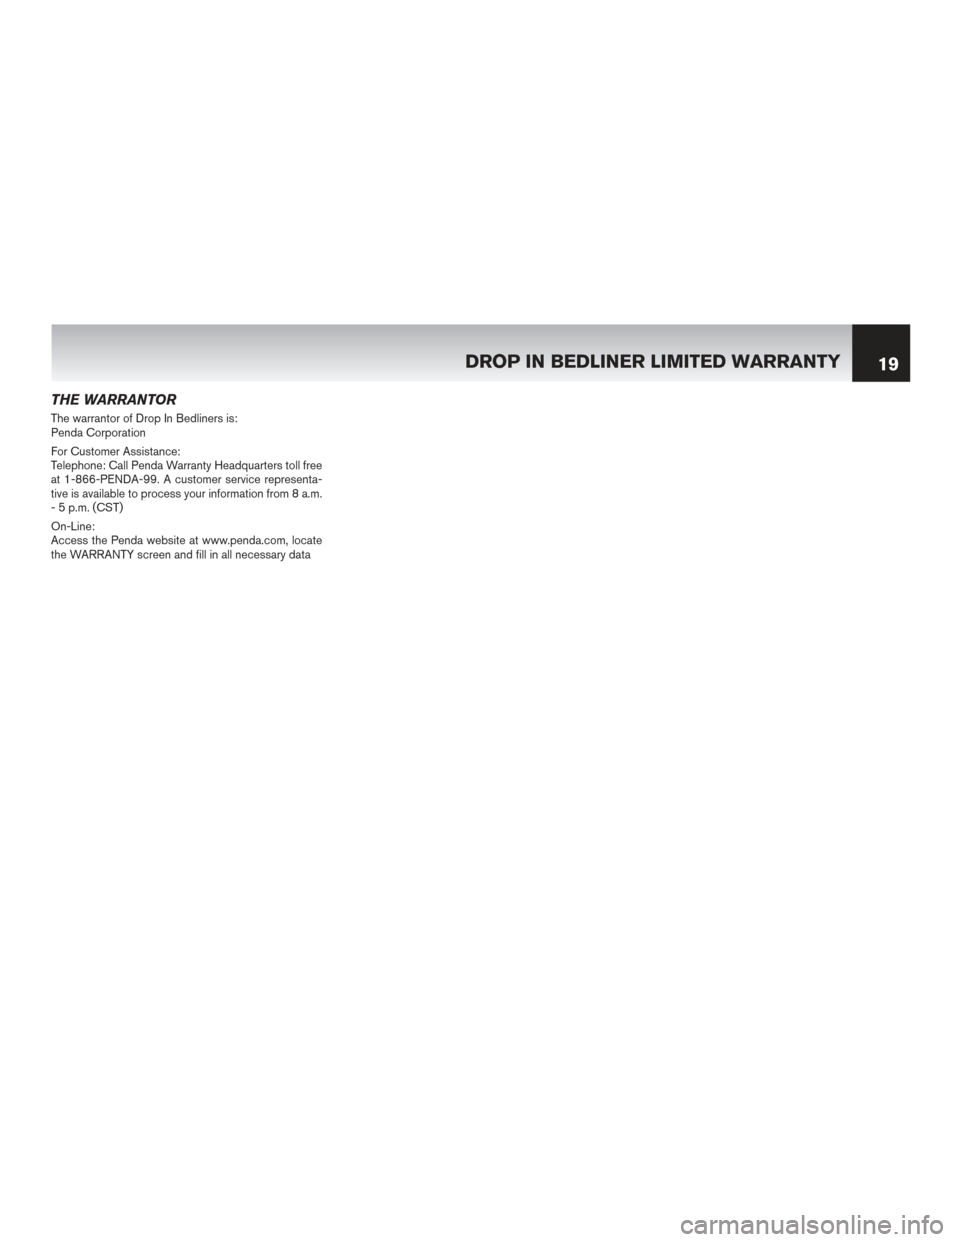 NISSAN XTERRA 2014 N50 / 2.G Warranty Booklet THE WARRANTOR
The warrantor of Drop In Bedliners is:
Penda Corporation
For Customer Assistance:
Telephone: Call Penda Warranty Headquarters toll free
at 1-866-PENDA-99. A customer service representa-
